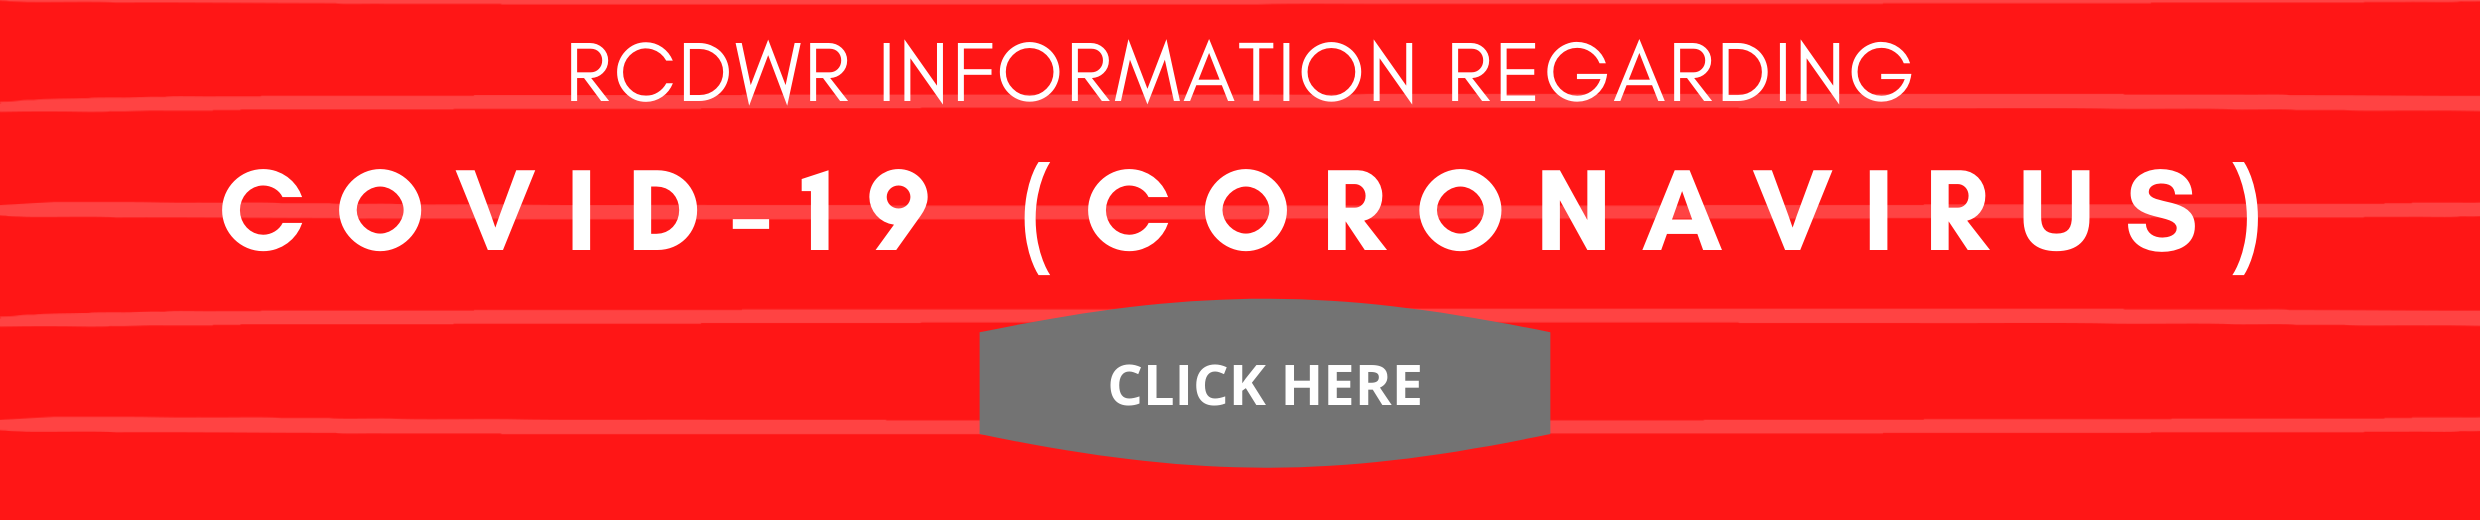 RCDWR Information Regarding COVID-19 (Coronavirus)